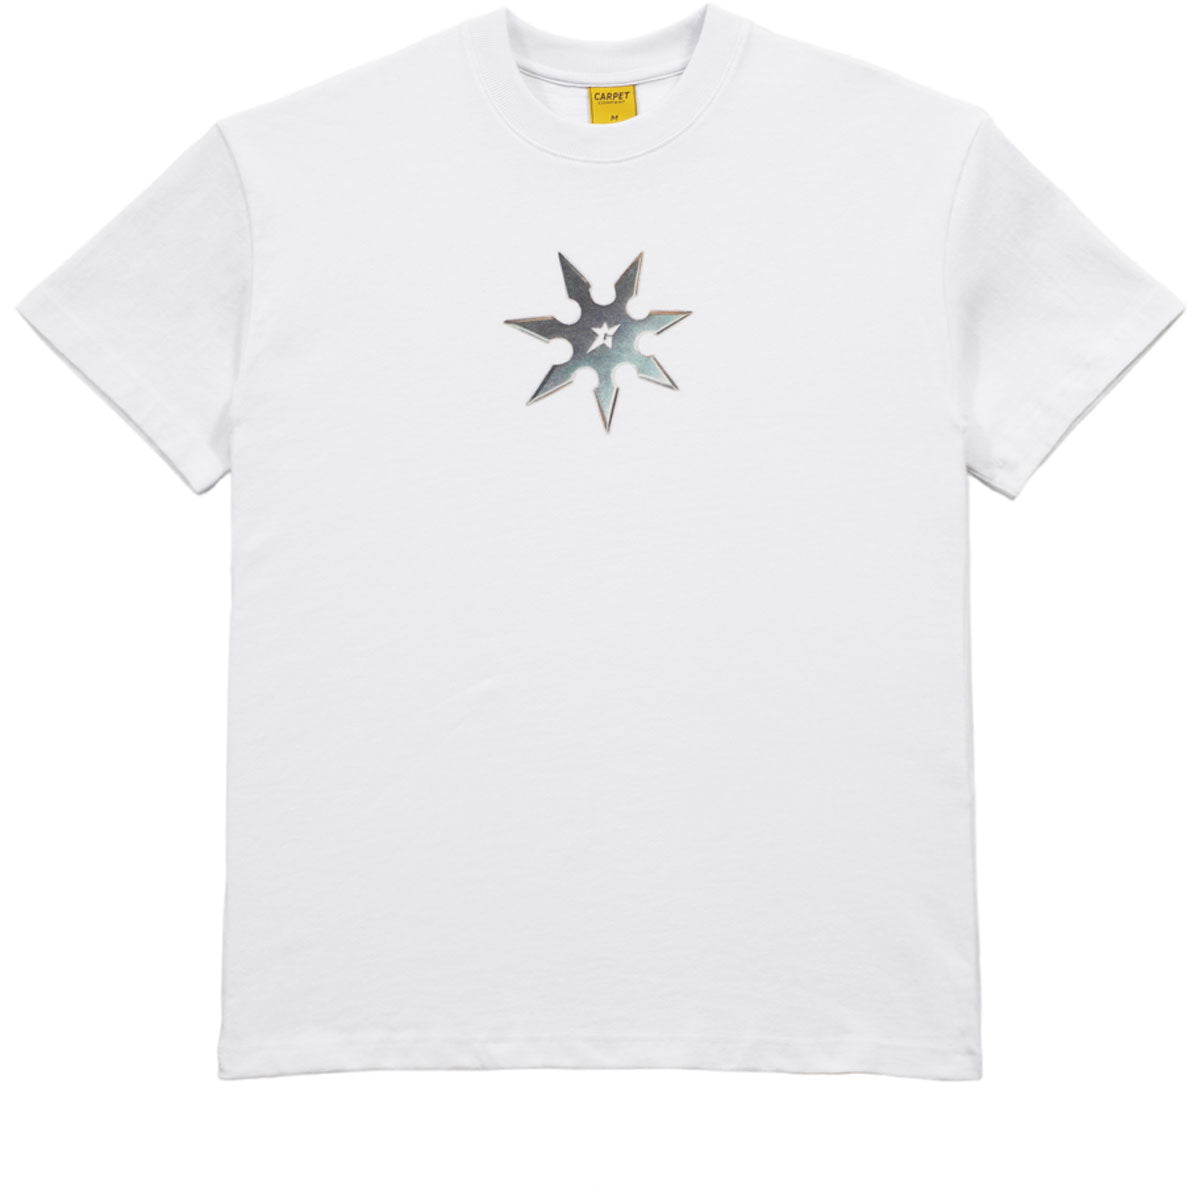 Carpet Company Throwing Star T-Shirt - White image 1